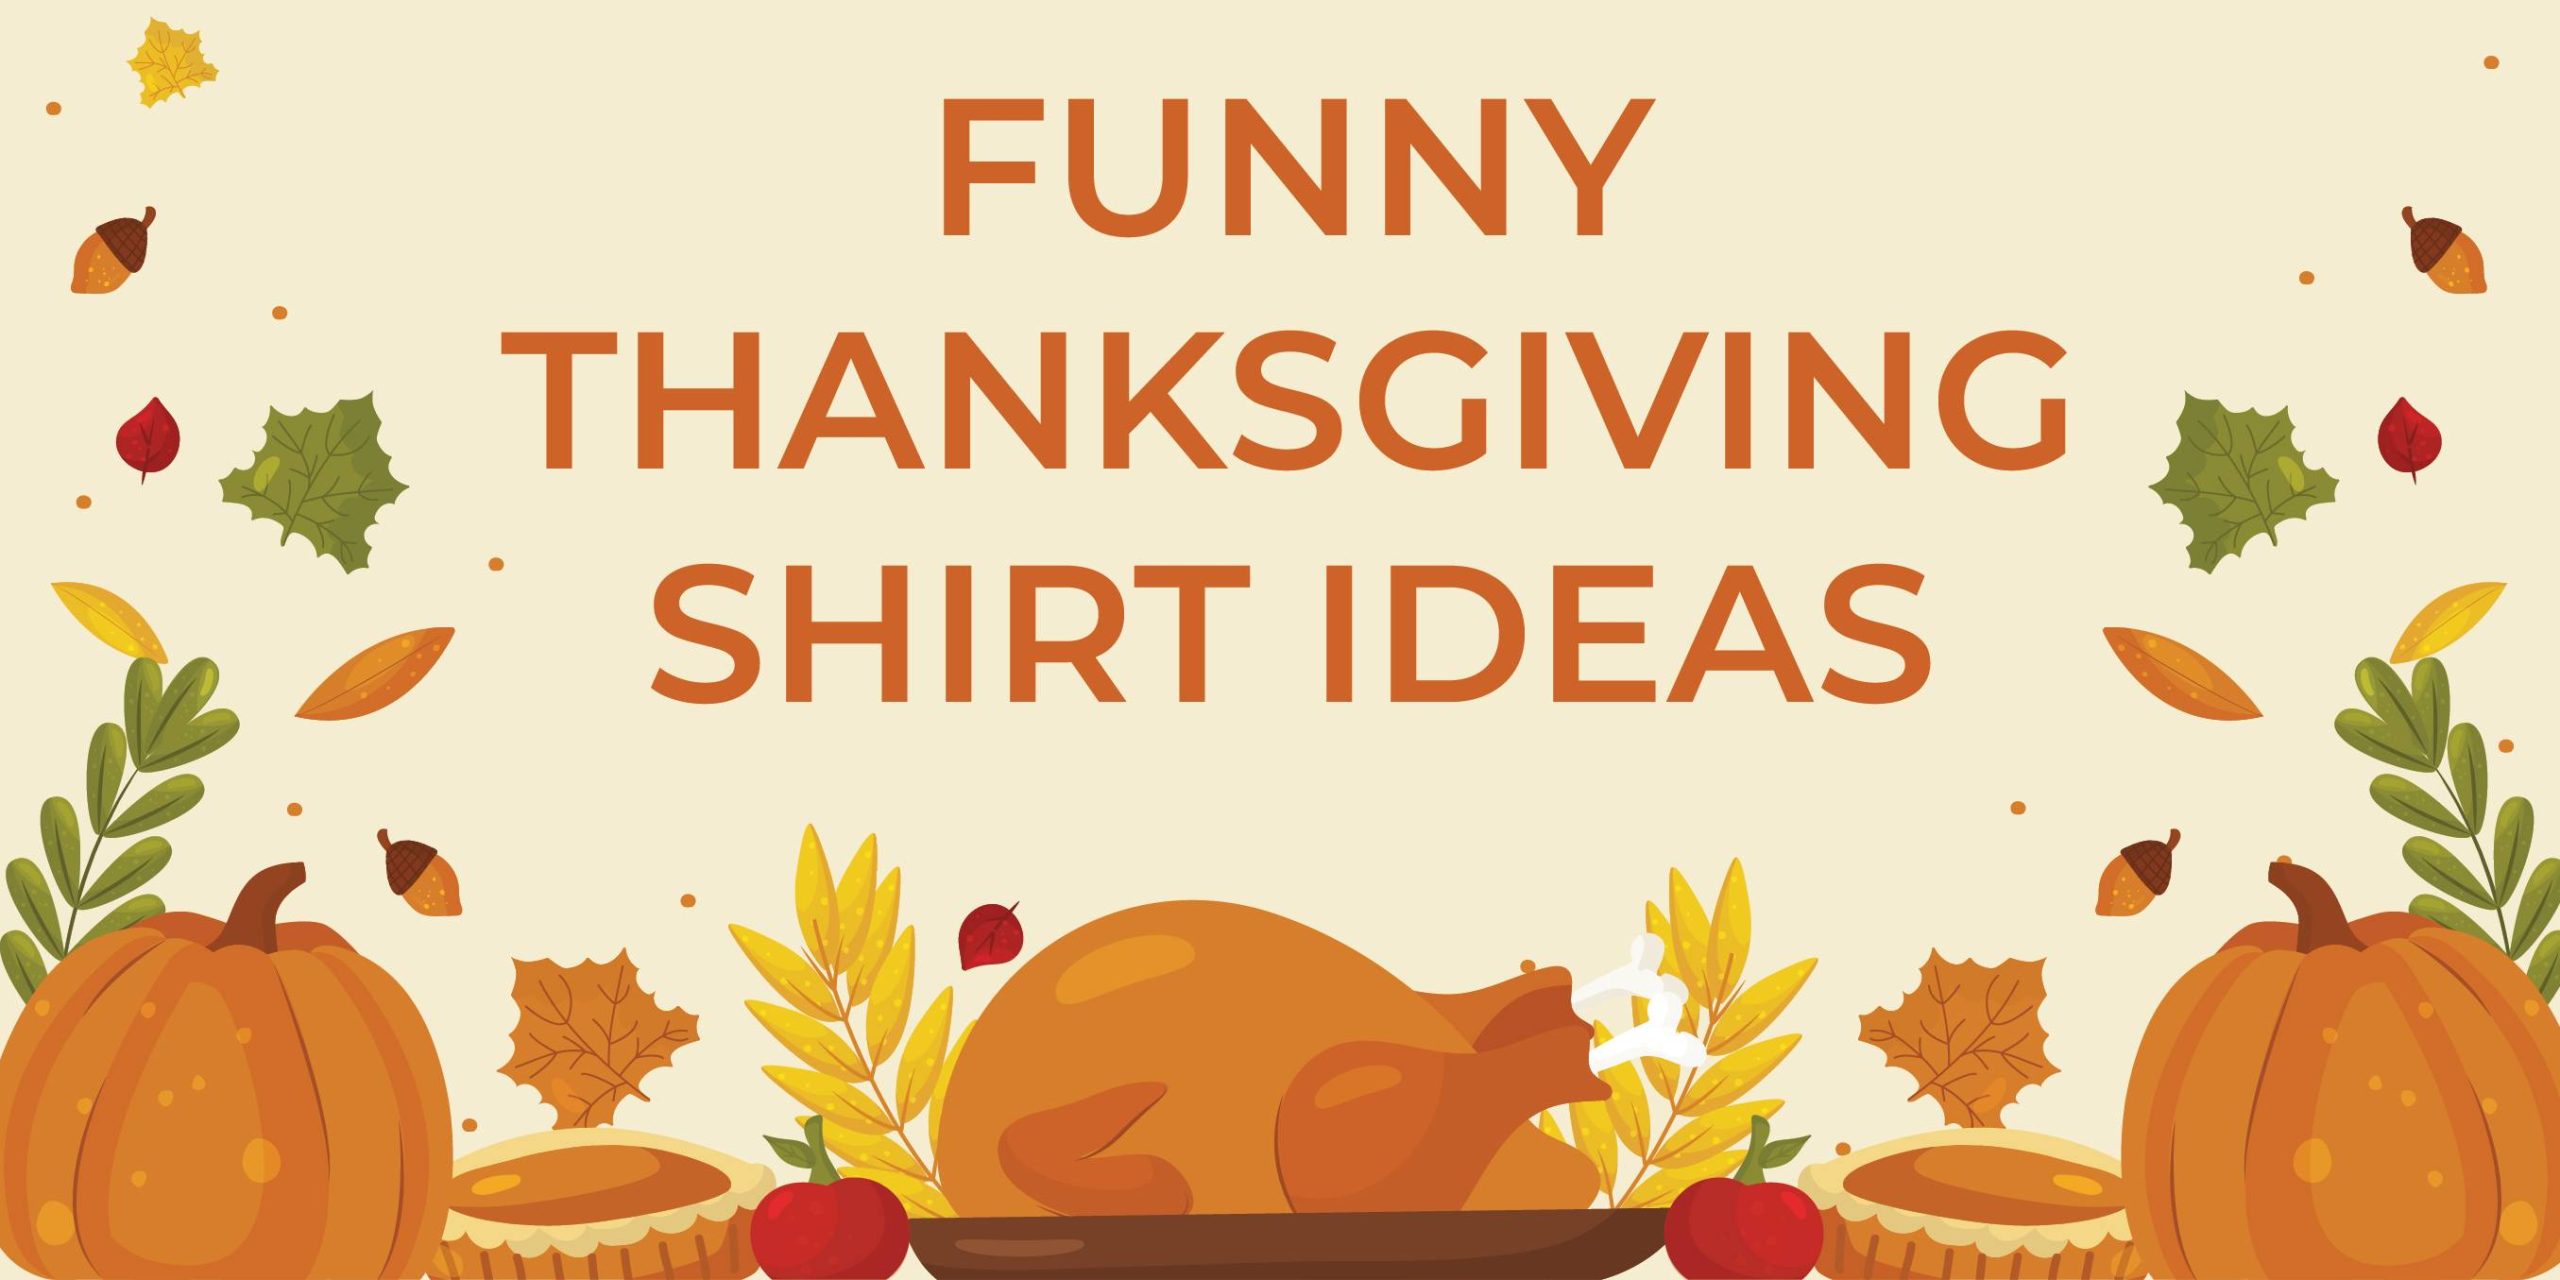 Funny Thanksgiving Shirt Ideas